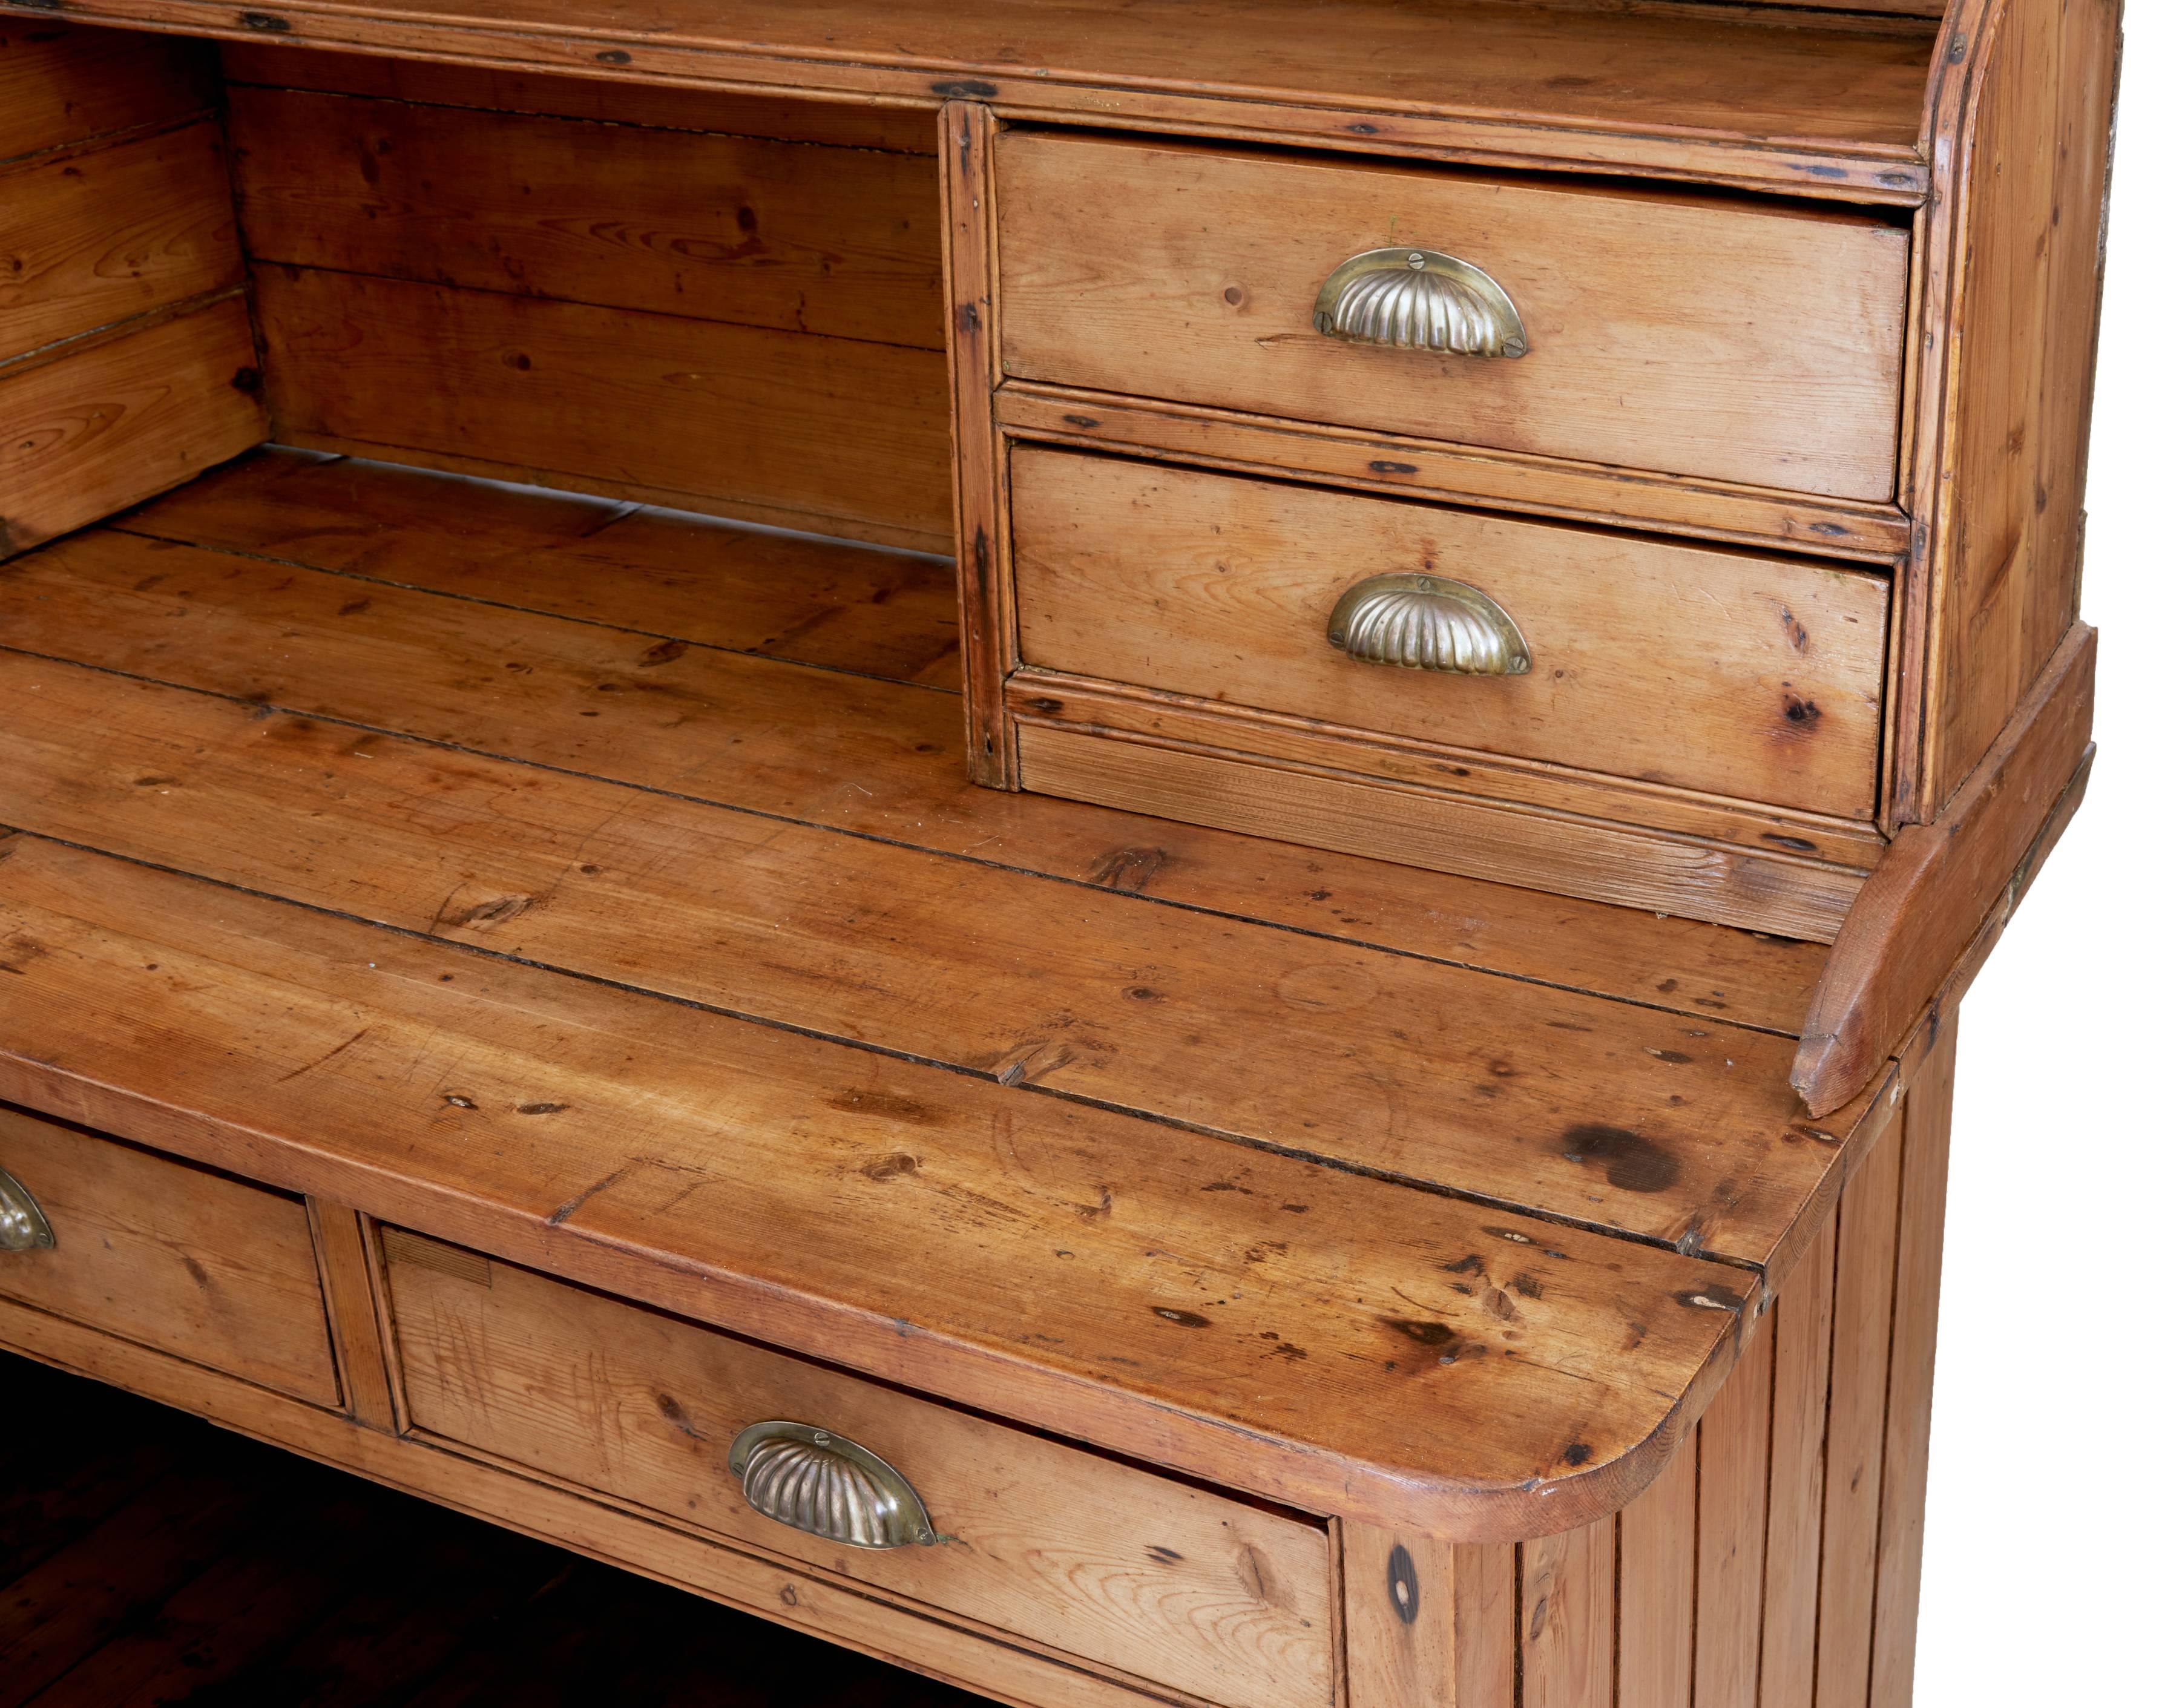 Great Britain (UK) 19th Century Rustic Victorian Pine Dresser and Rack